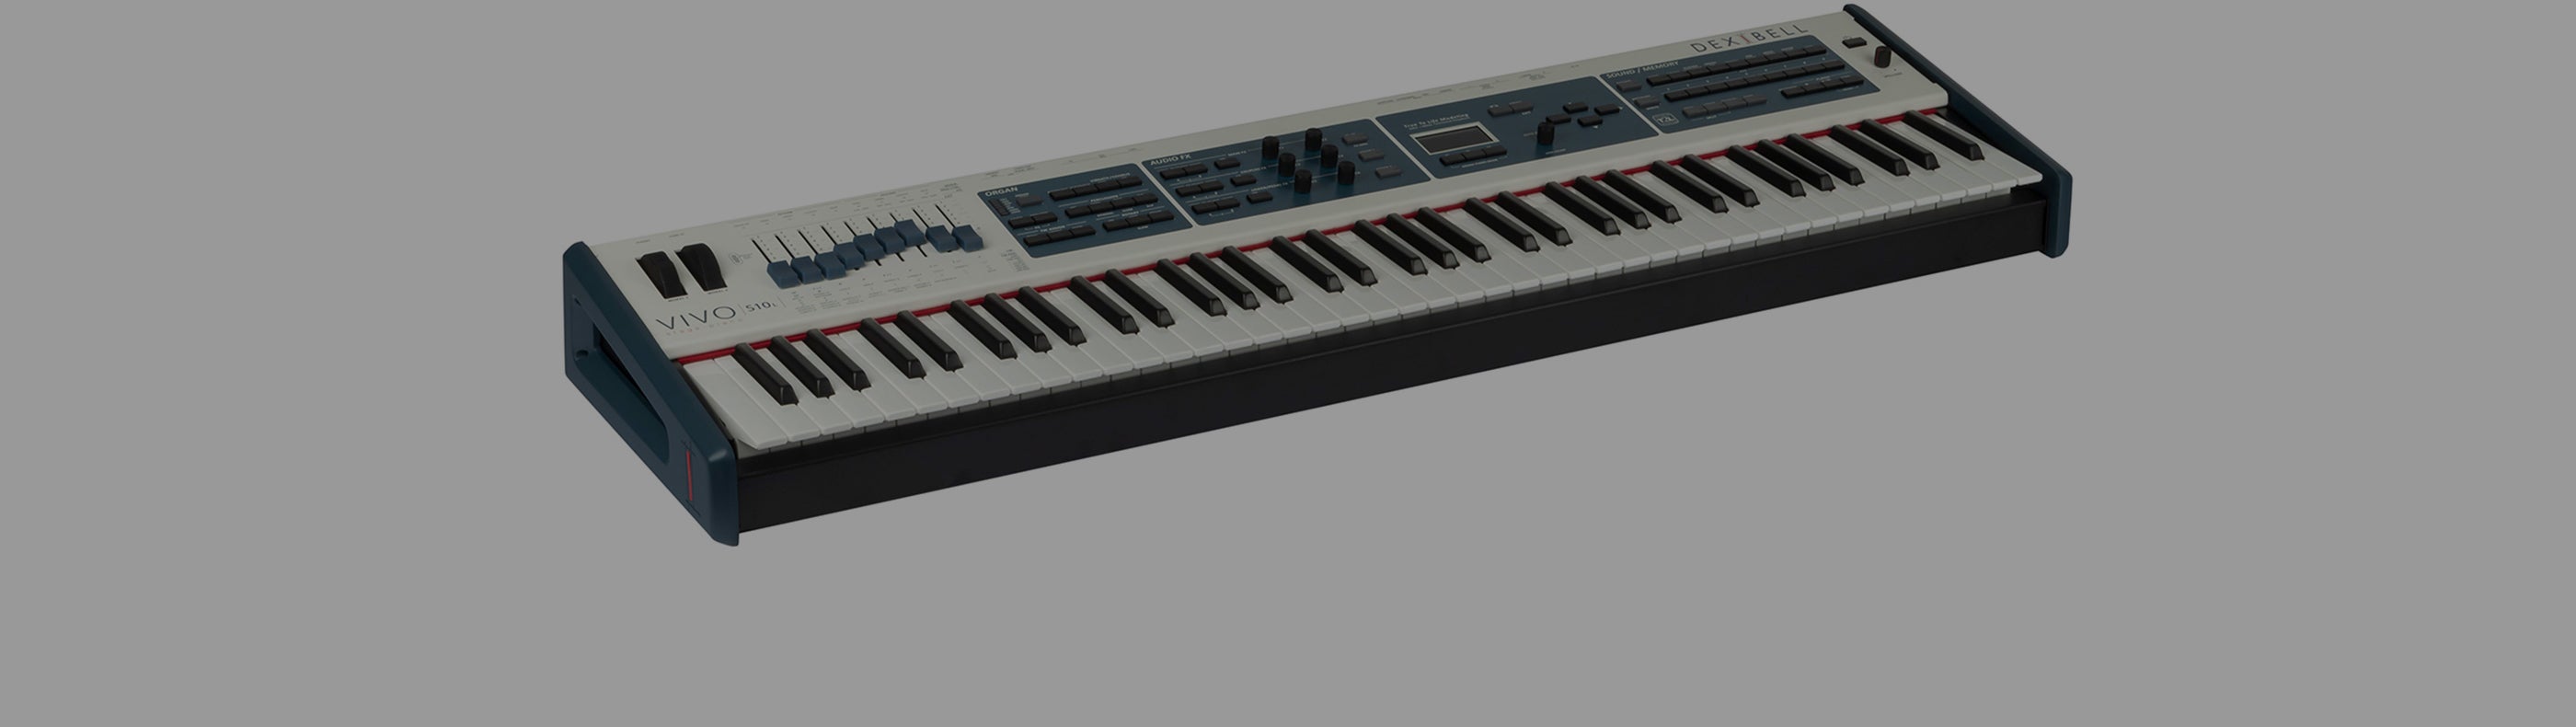 Dexibell Vivo S10 & S10L Stage Pianos - Save w/ Bundles! – Kraft Music